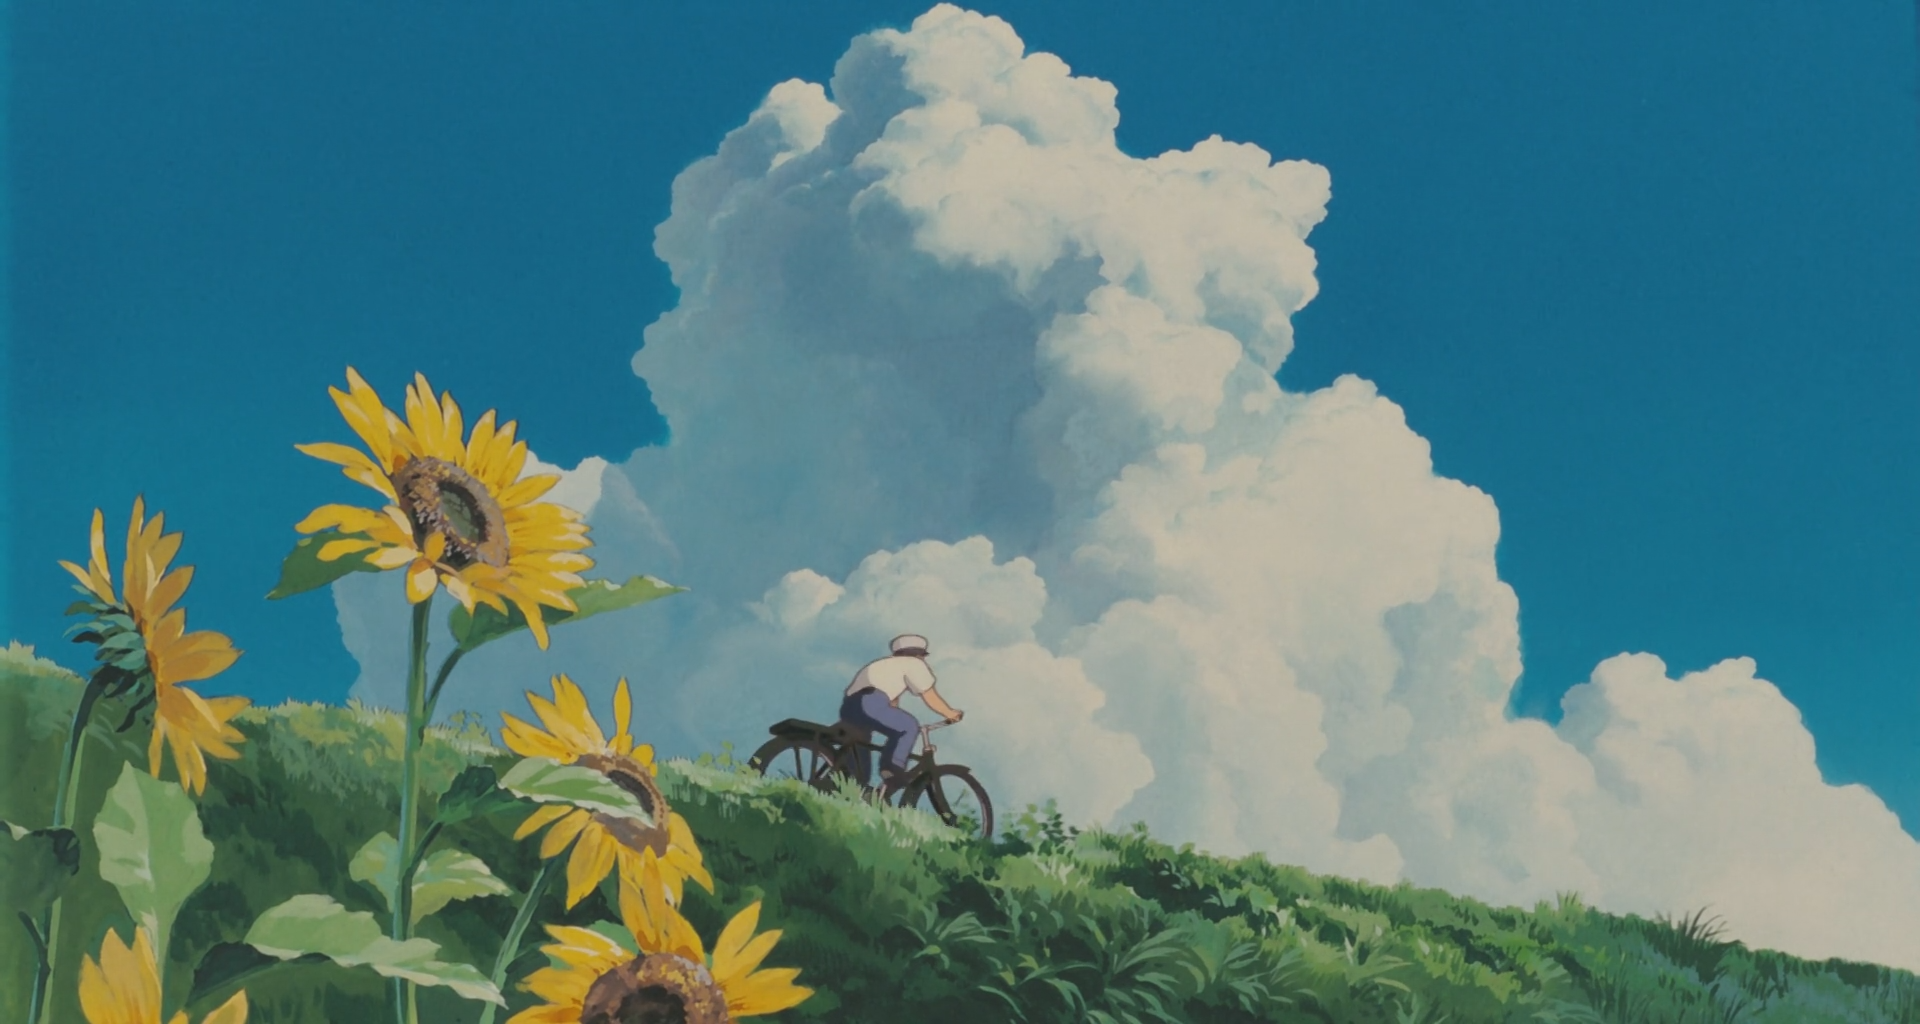 Studio Ghibli Landscape Wallpaper Free Studio Ghibli Landscape Background